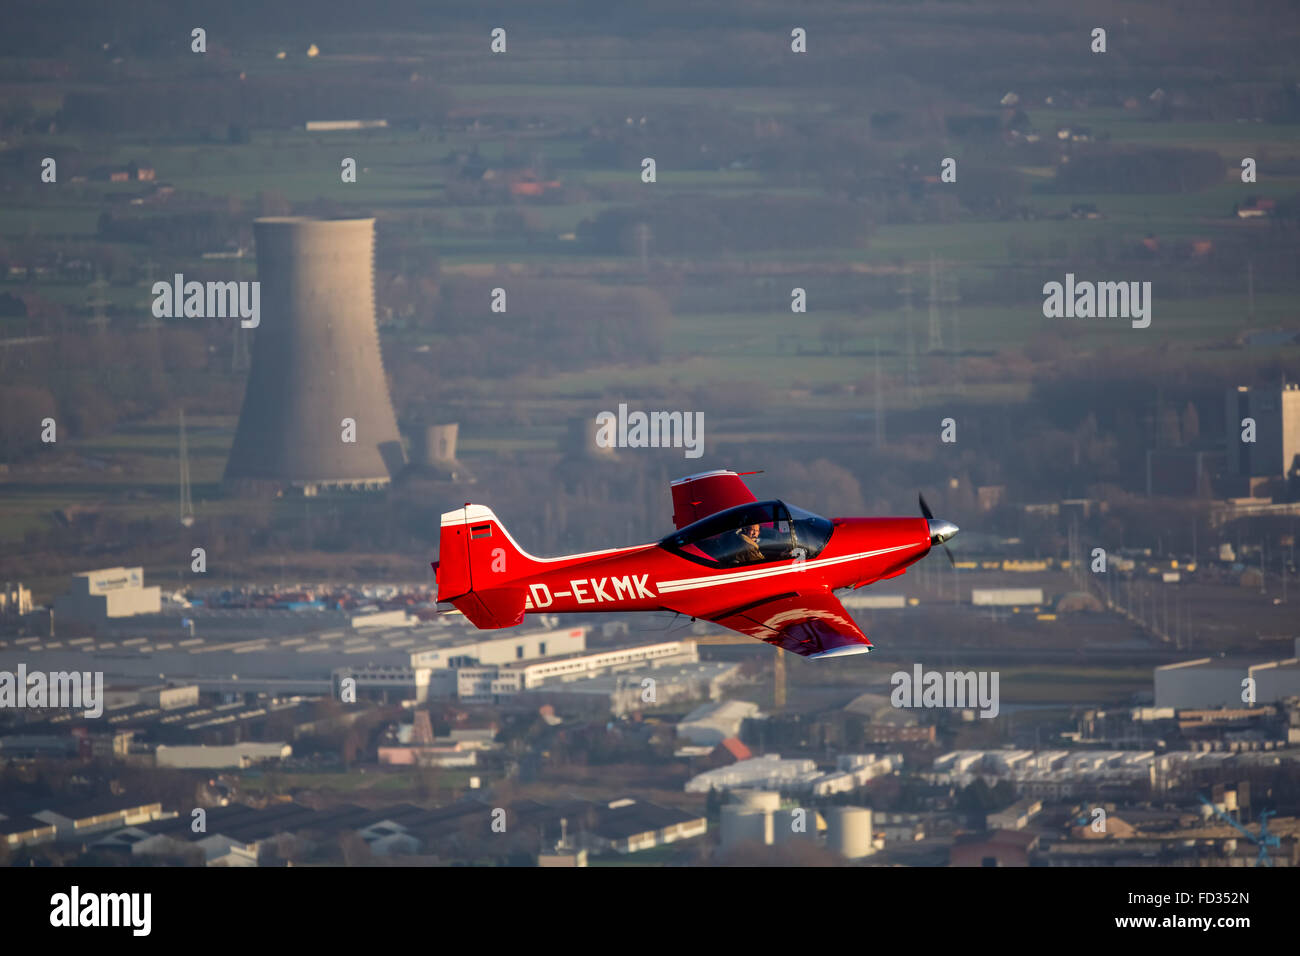 Aerial view, red plane Falco, timber construction, blue sky, D-EKMEK, general aviation, rice aircraft Echo class light aircraft Stock Photo